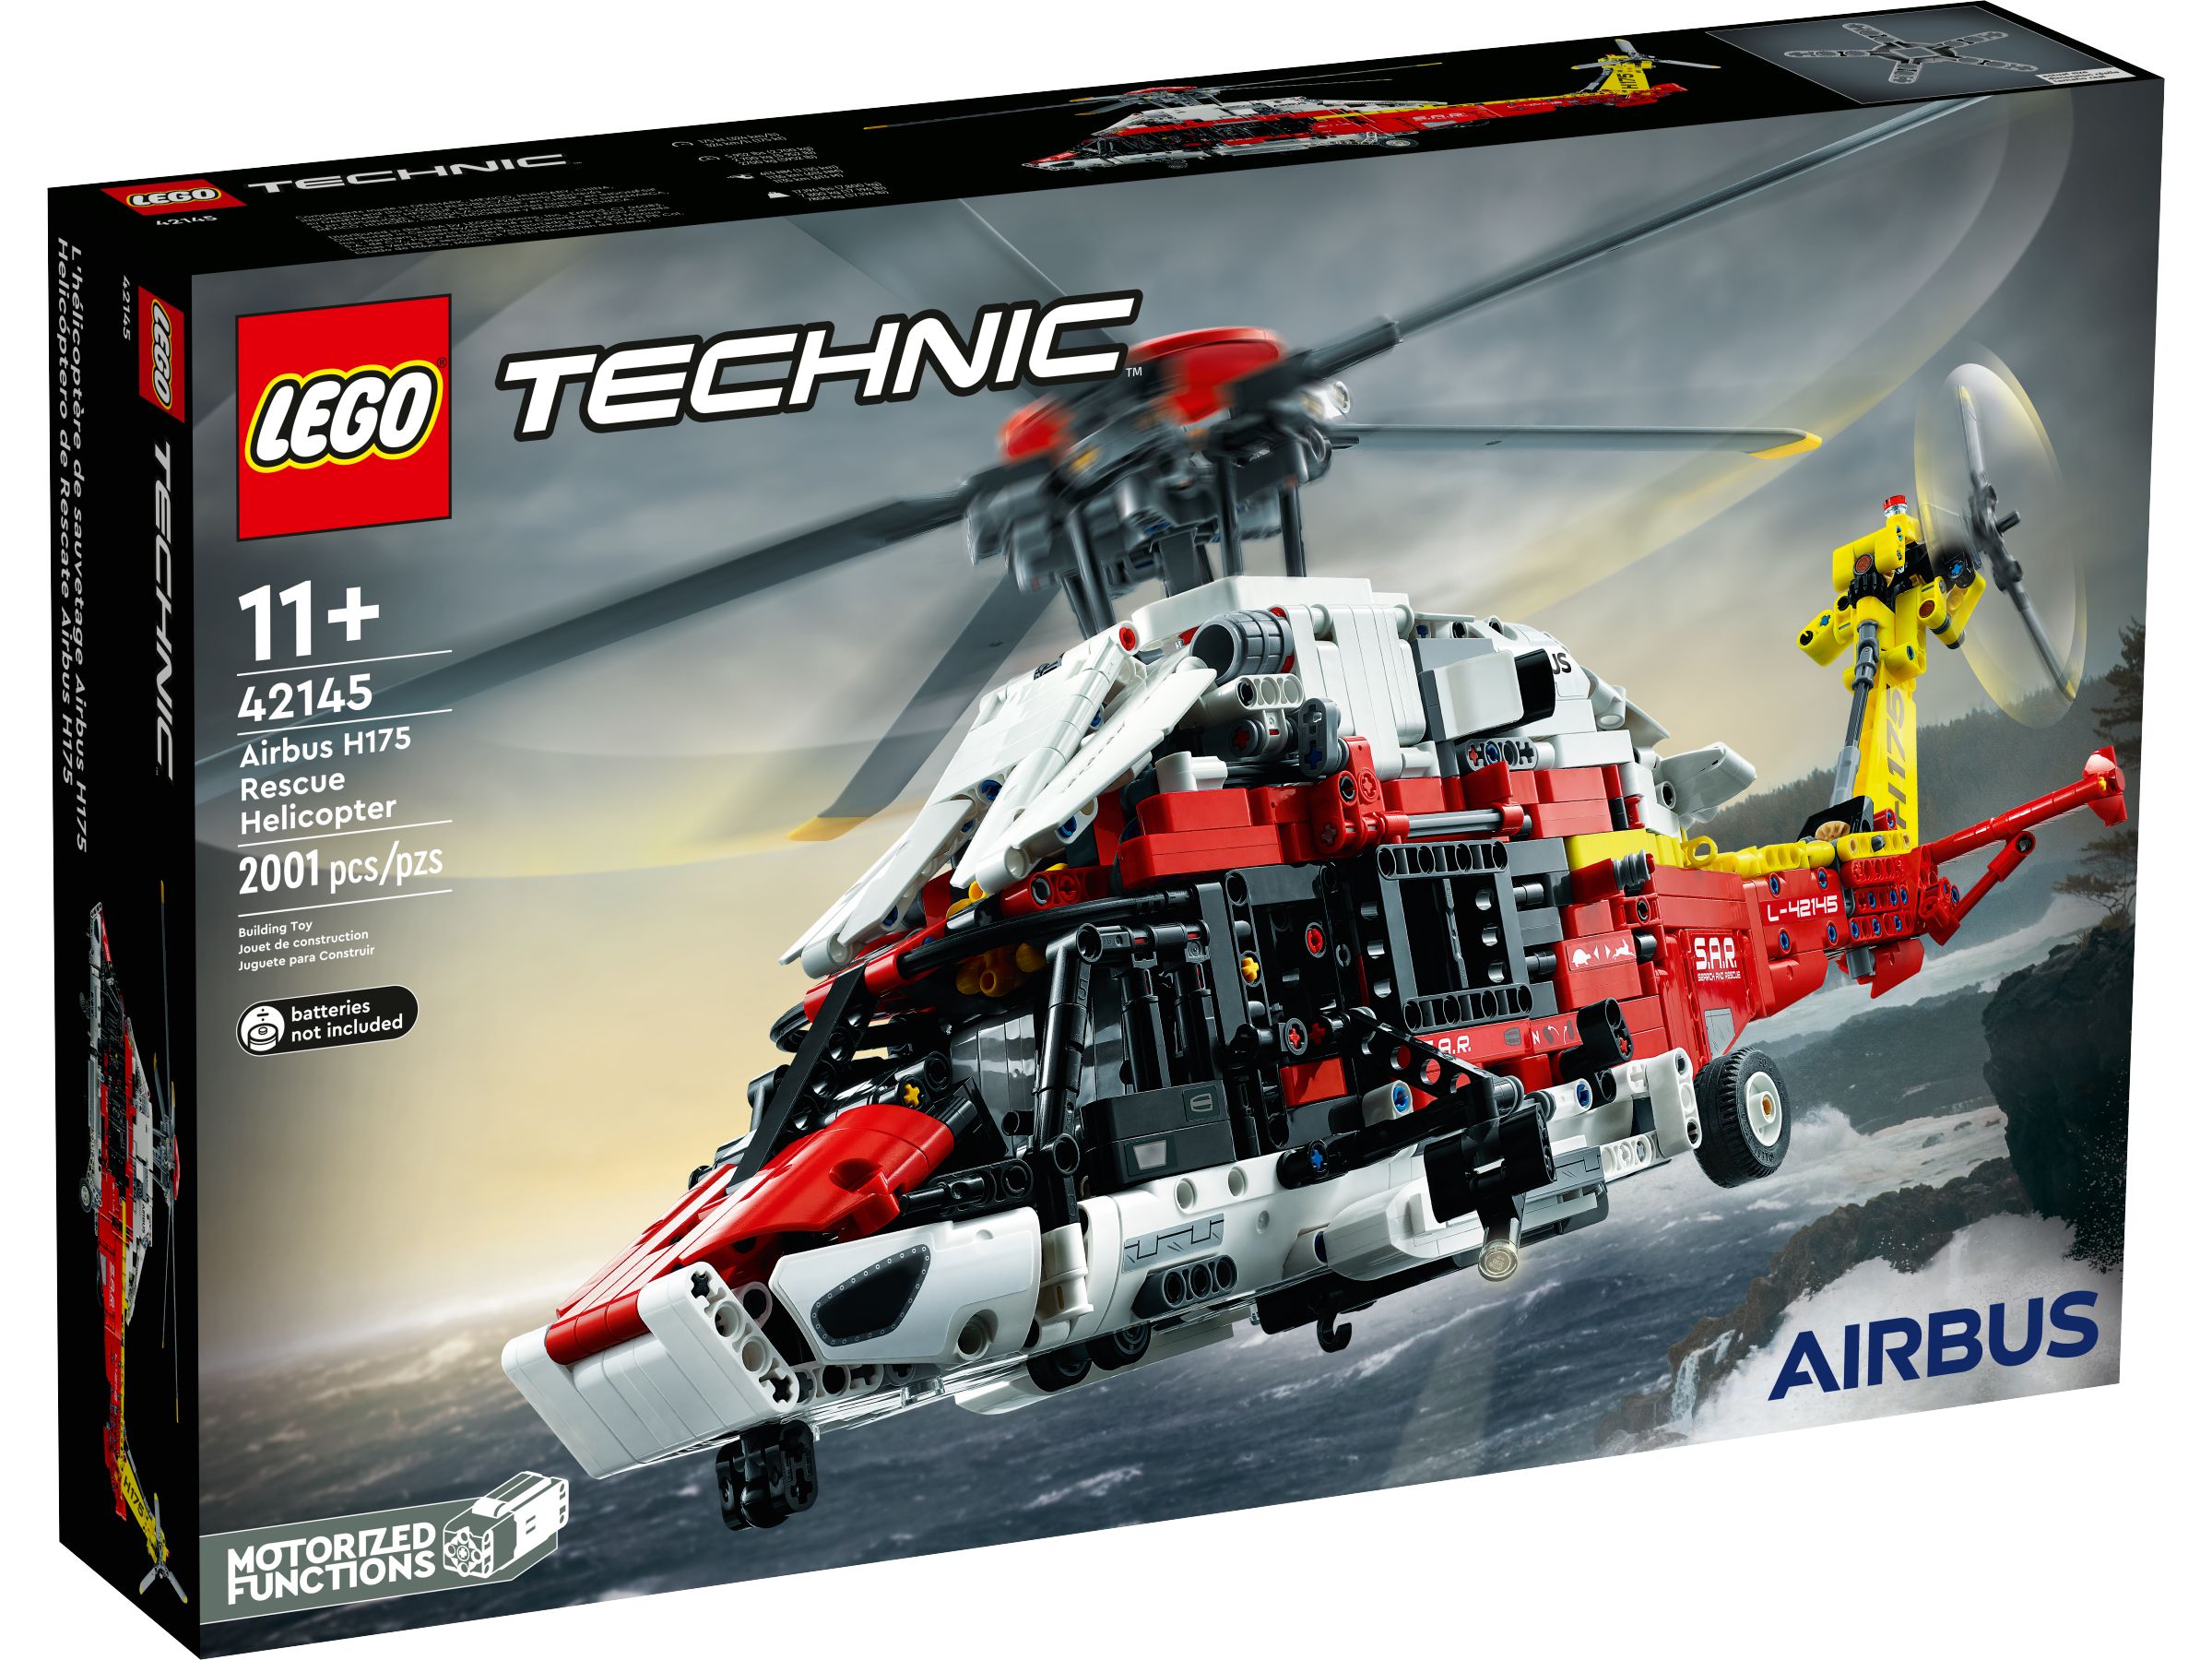 LEGO Technic 42145 Airbus H175 Rettungshubschrauber LEGO_42145_alt1.jpg